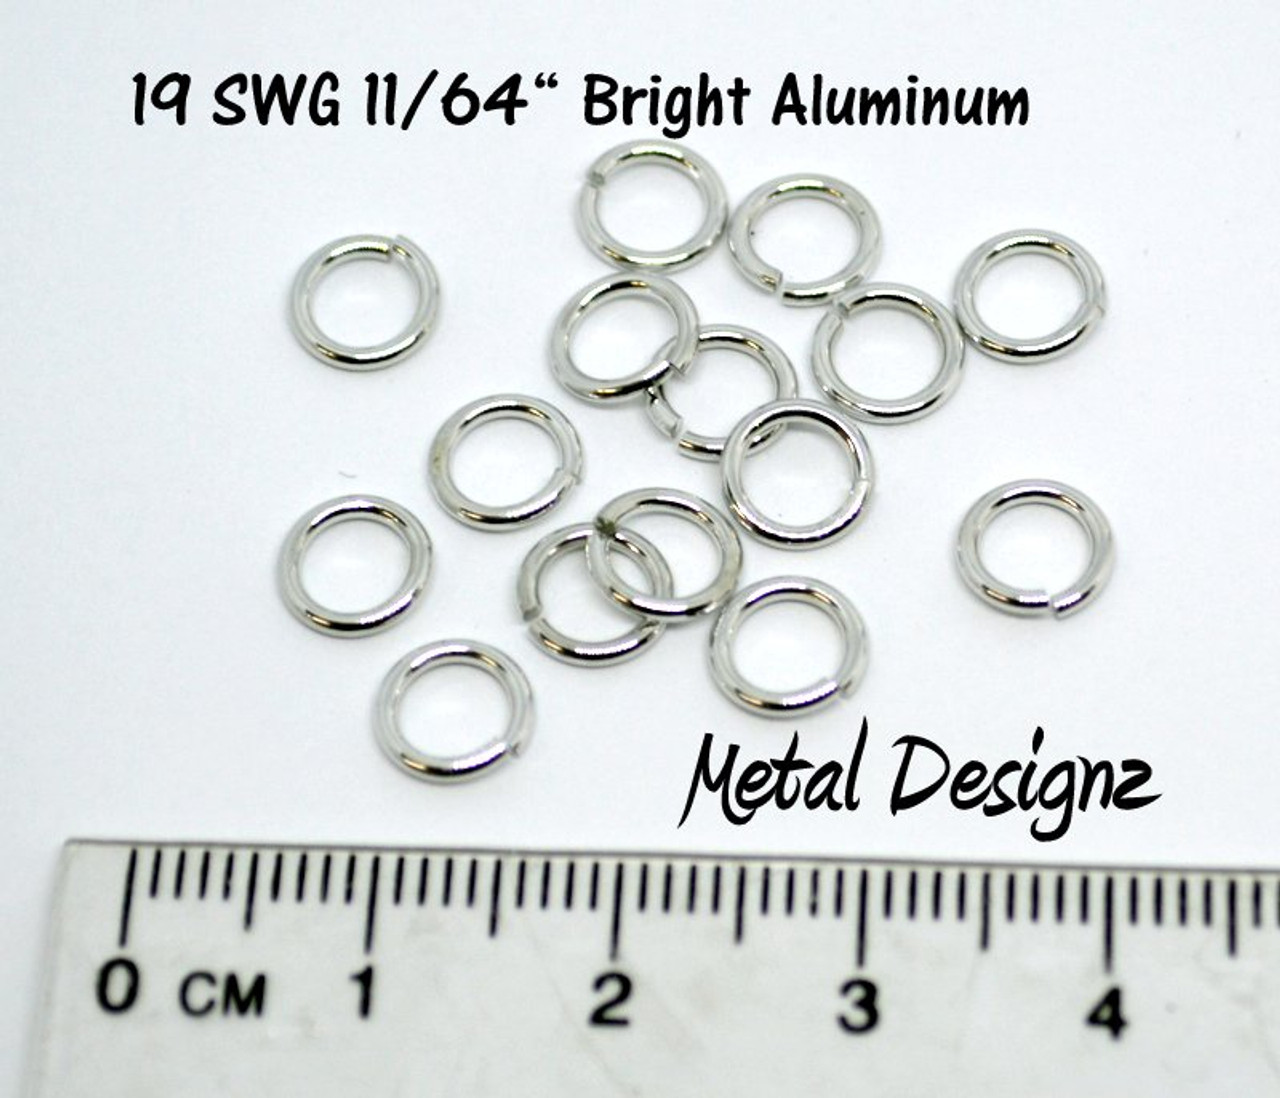 Bright Aluminum Jump Rings 19 SWG Gauge 11/64 - Metal Designz